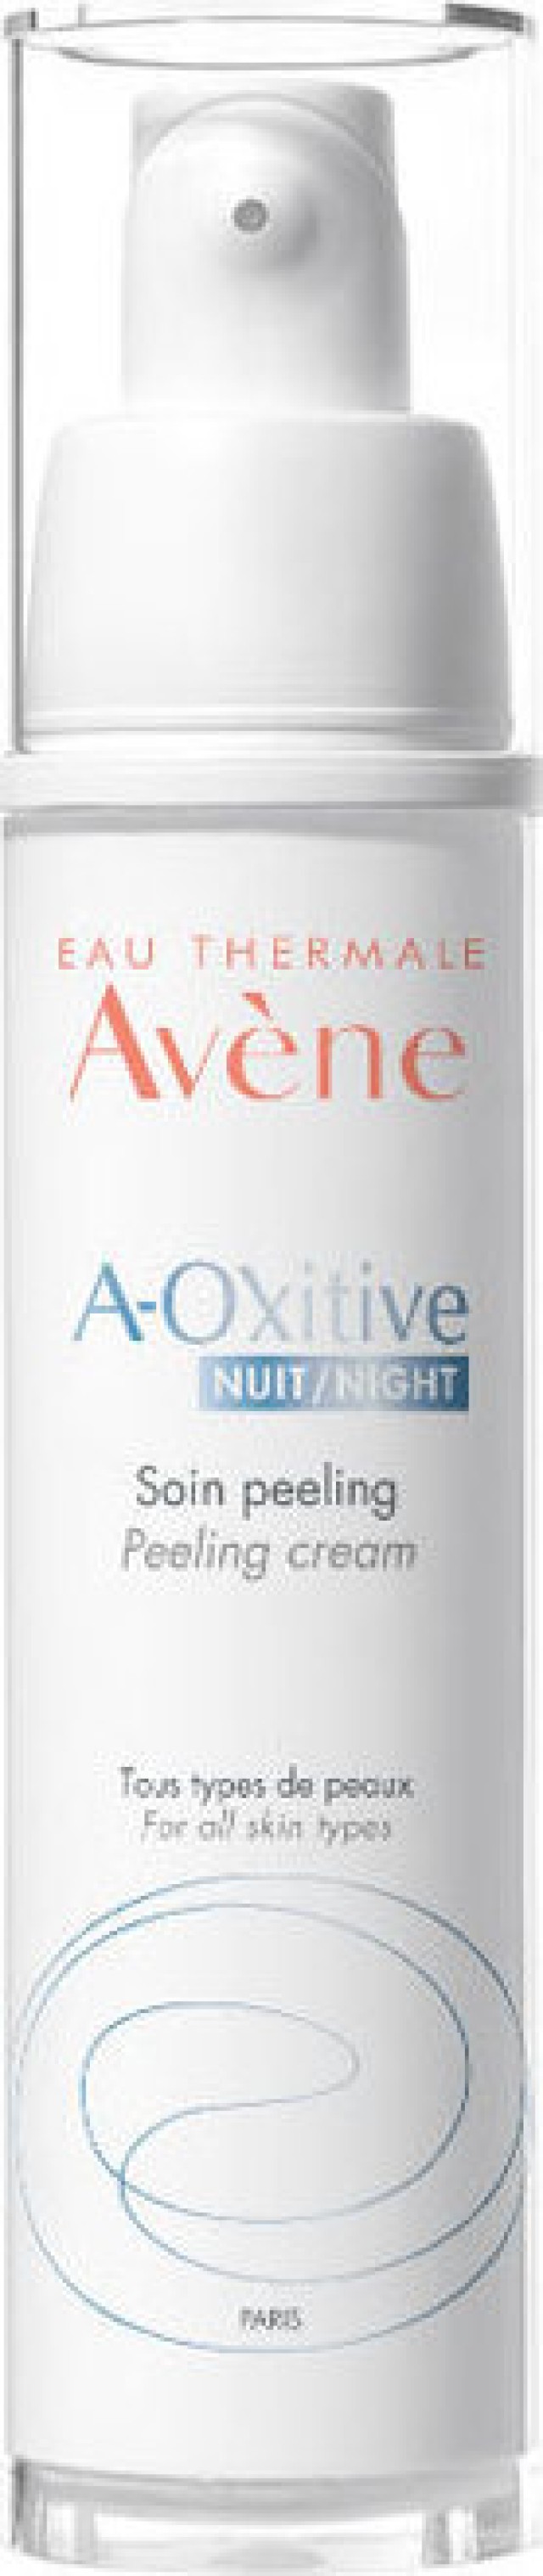 Avene A-oxitive Night Peeling Cream Κρέμα Νύχτας Με Δράση Peeling Για Λείανση & Λάμψη 30ml